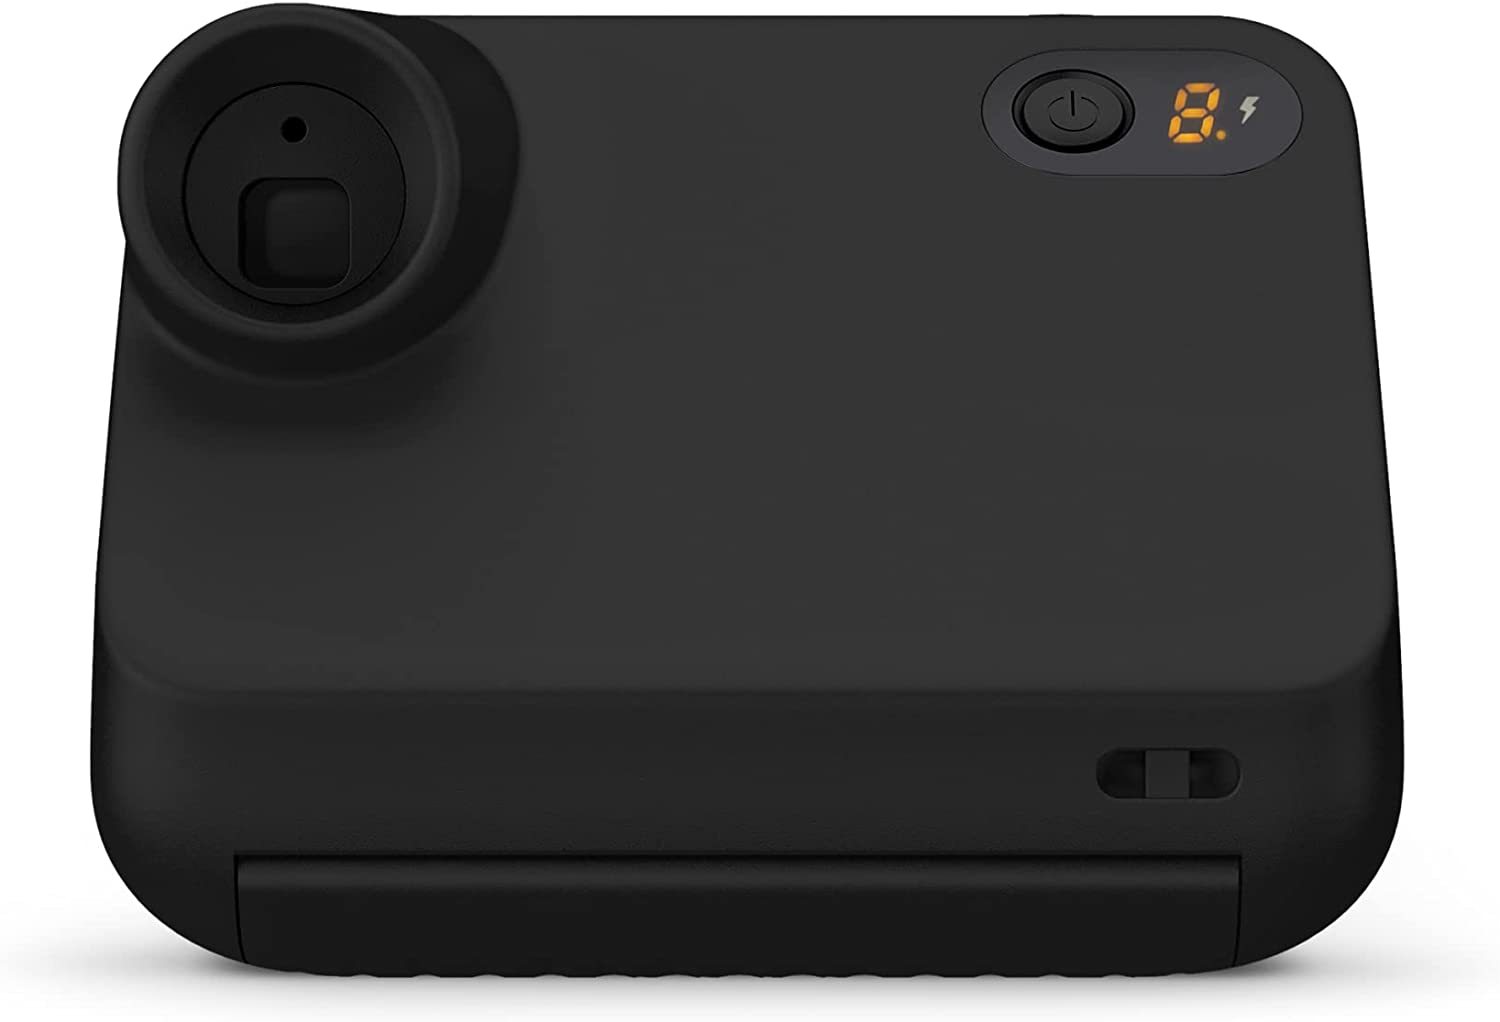 Polaroid Go Instant Camera (Black)